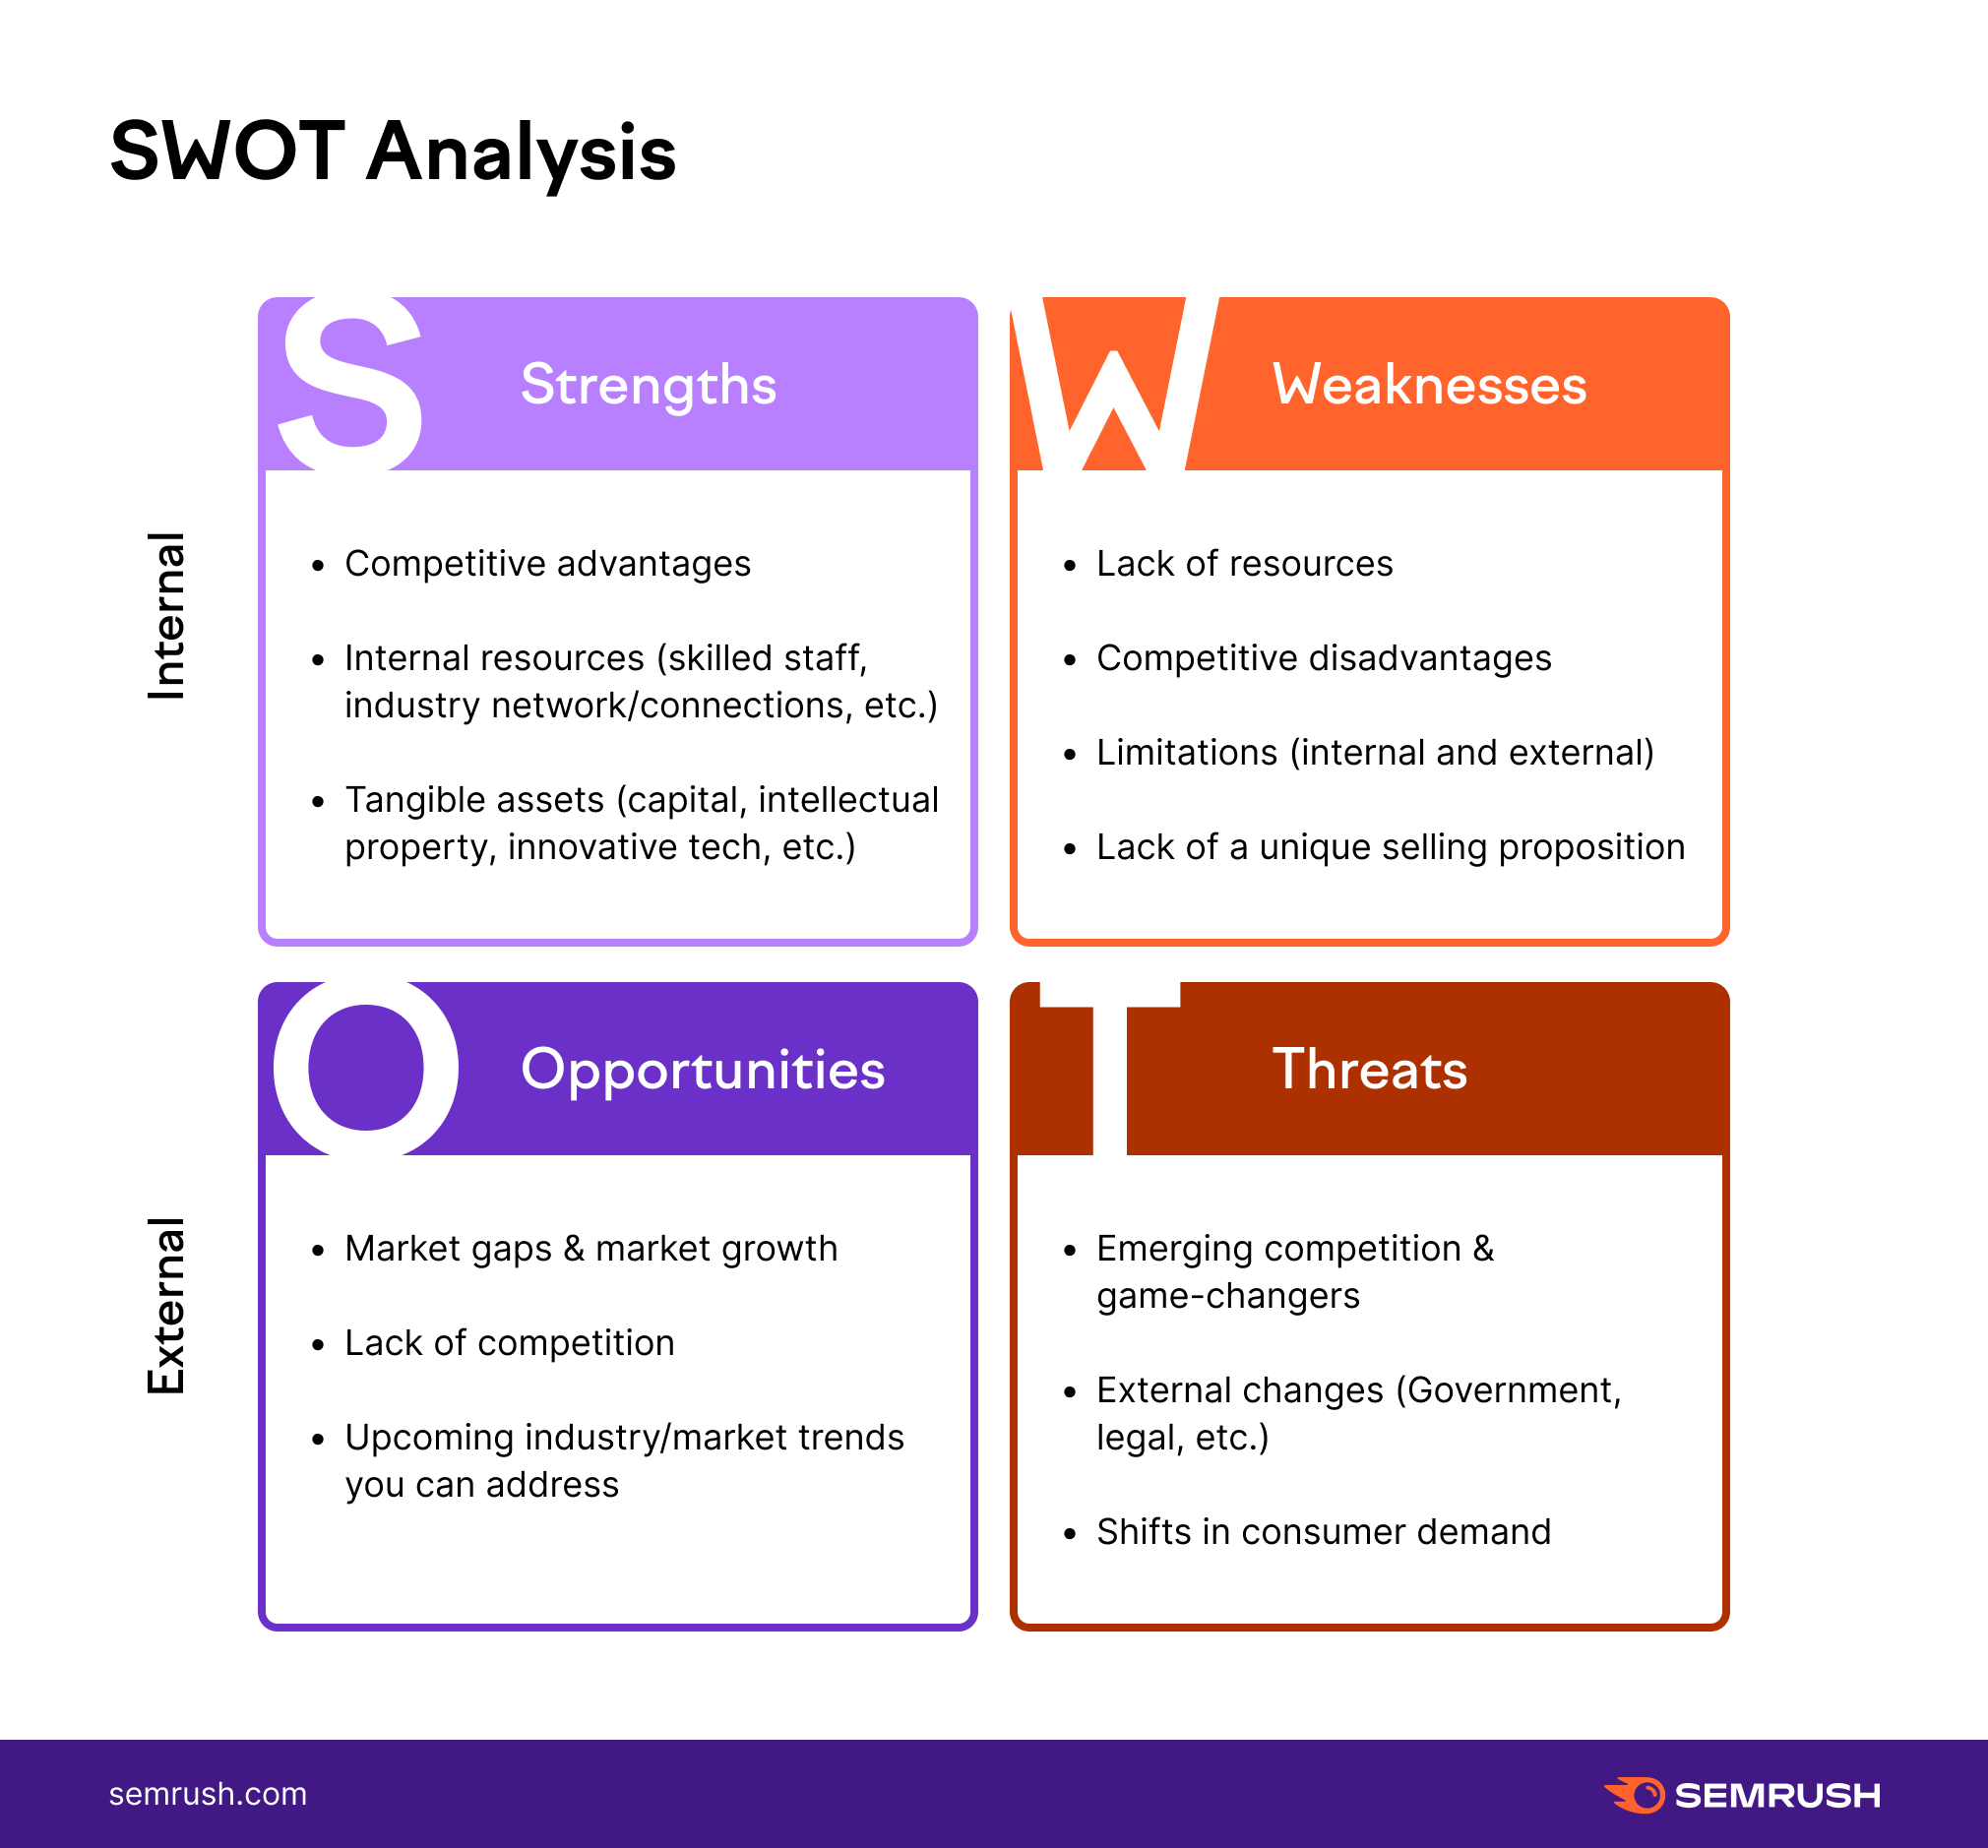 SWOT Analysis example